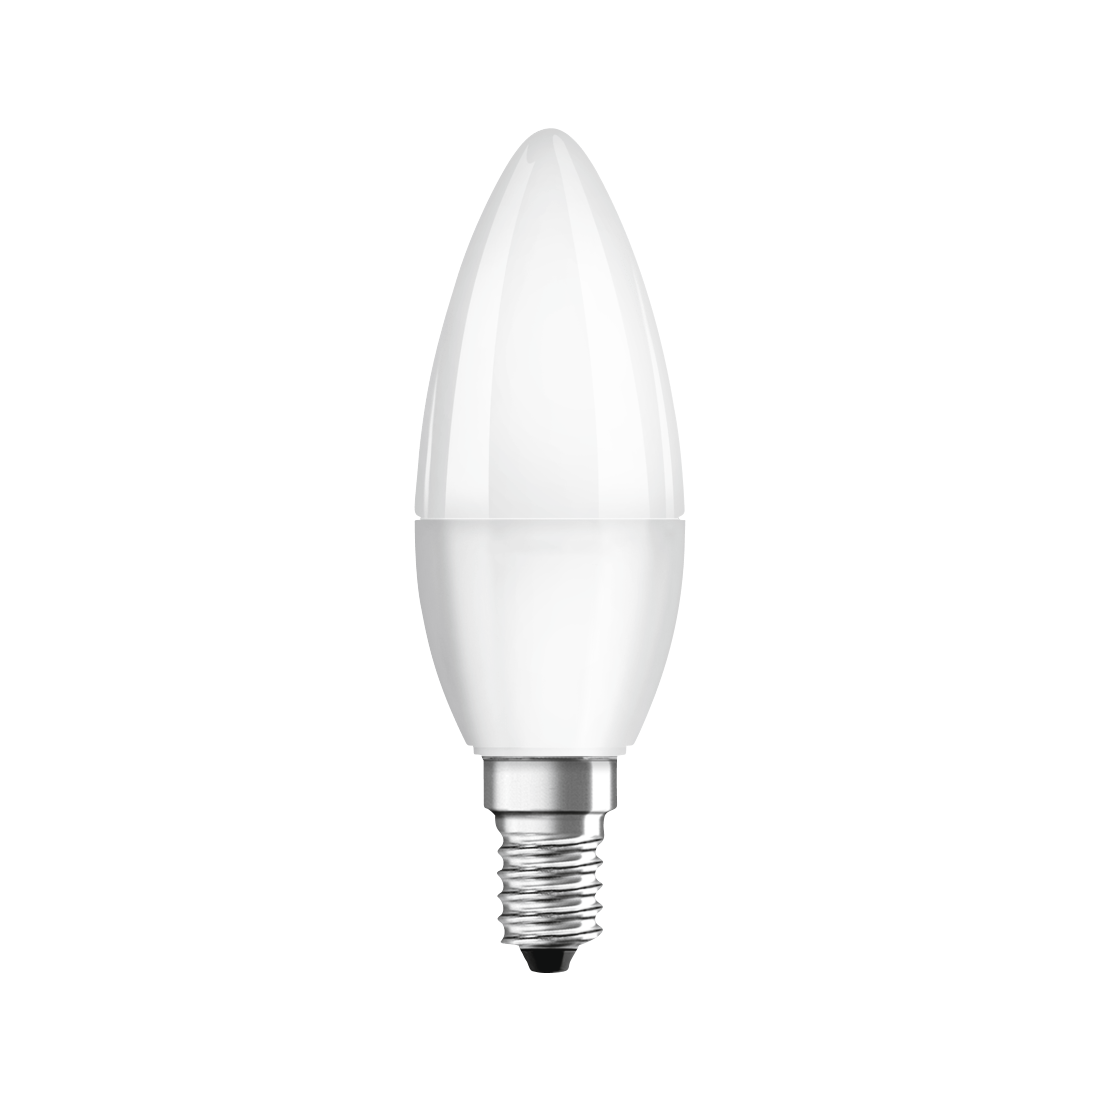 abx2 Druckfähige Abbildung 2 - Xavax, LED-Lampe, E14, 470lm ersetzt 40W, Kerzenlampe, Warmweiß, 2 Stück